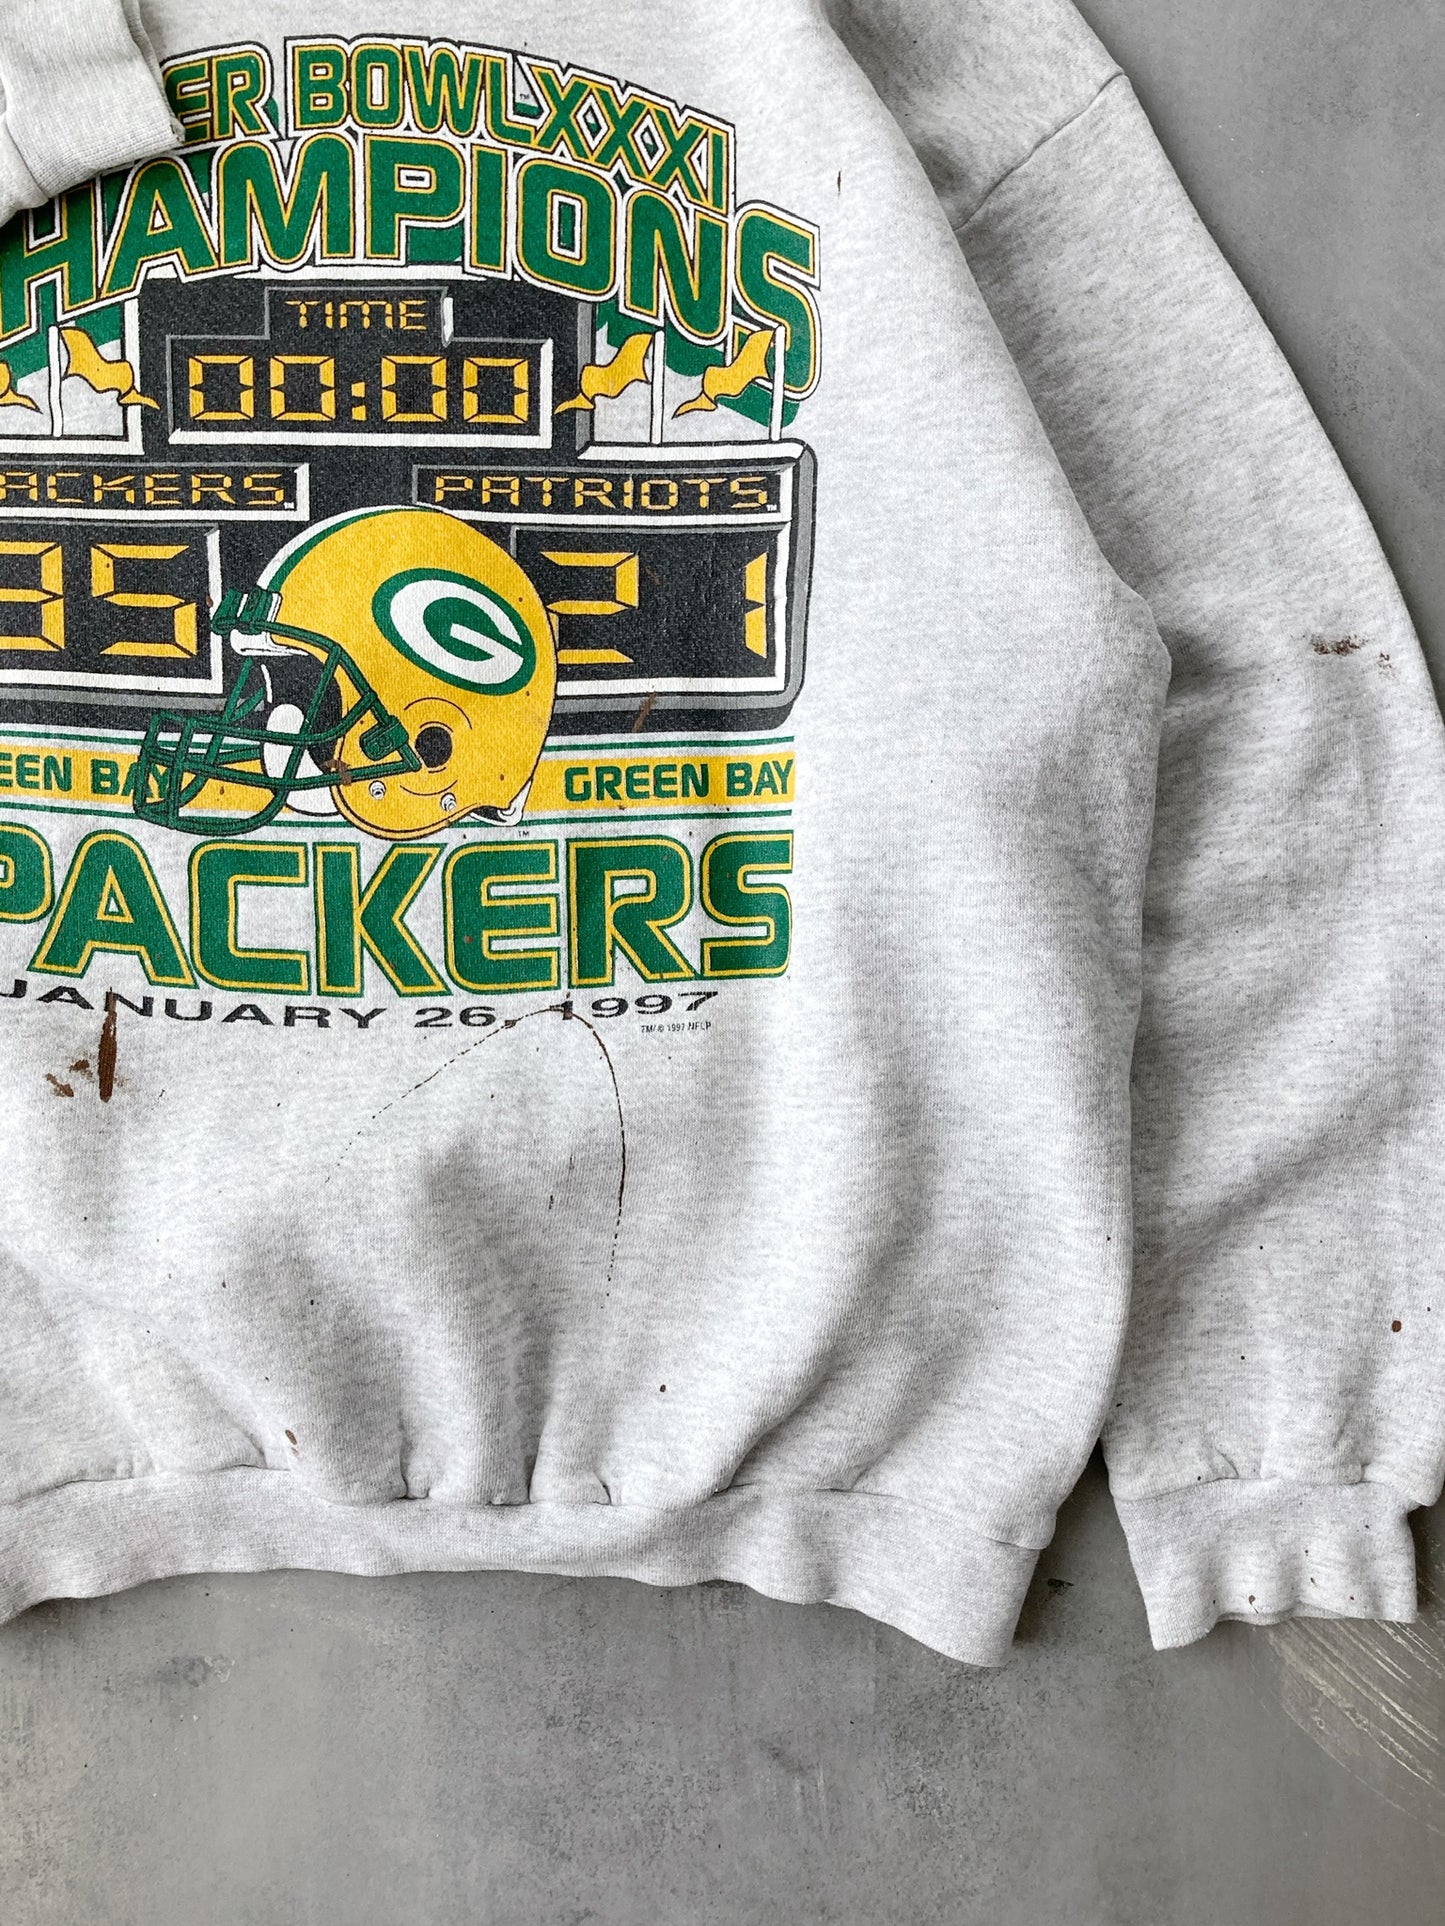 Green Bay Packers Super Bowl XXXI Sweatshirt '97 - Large